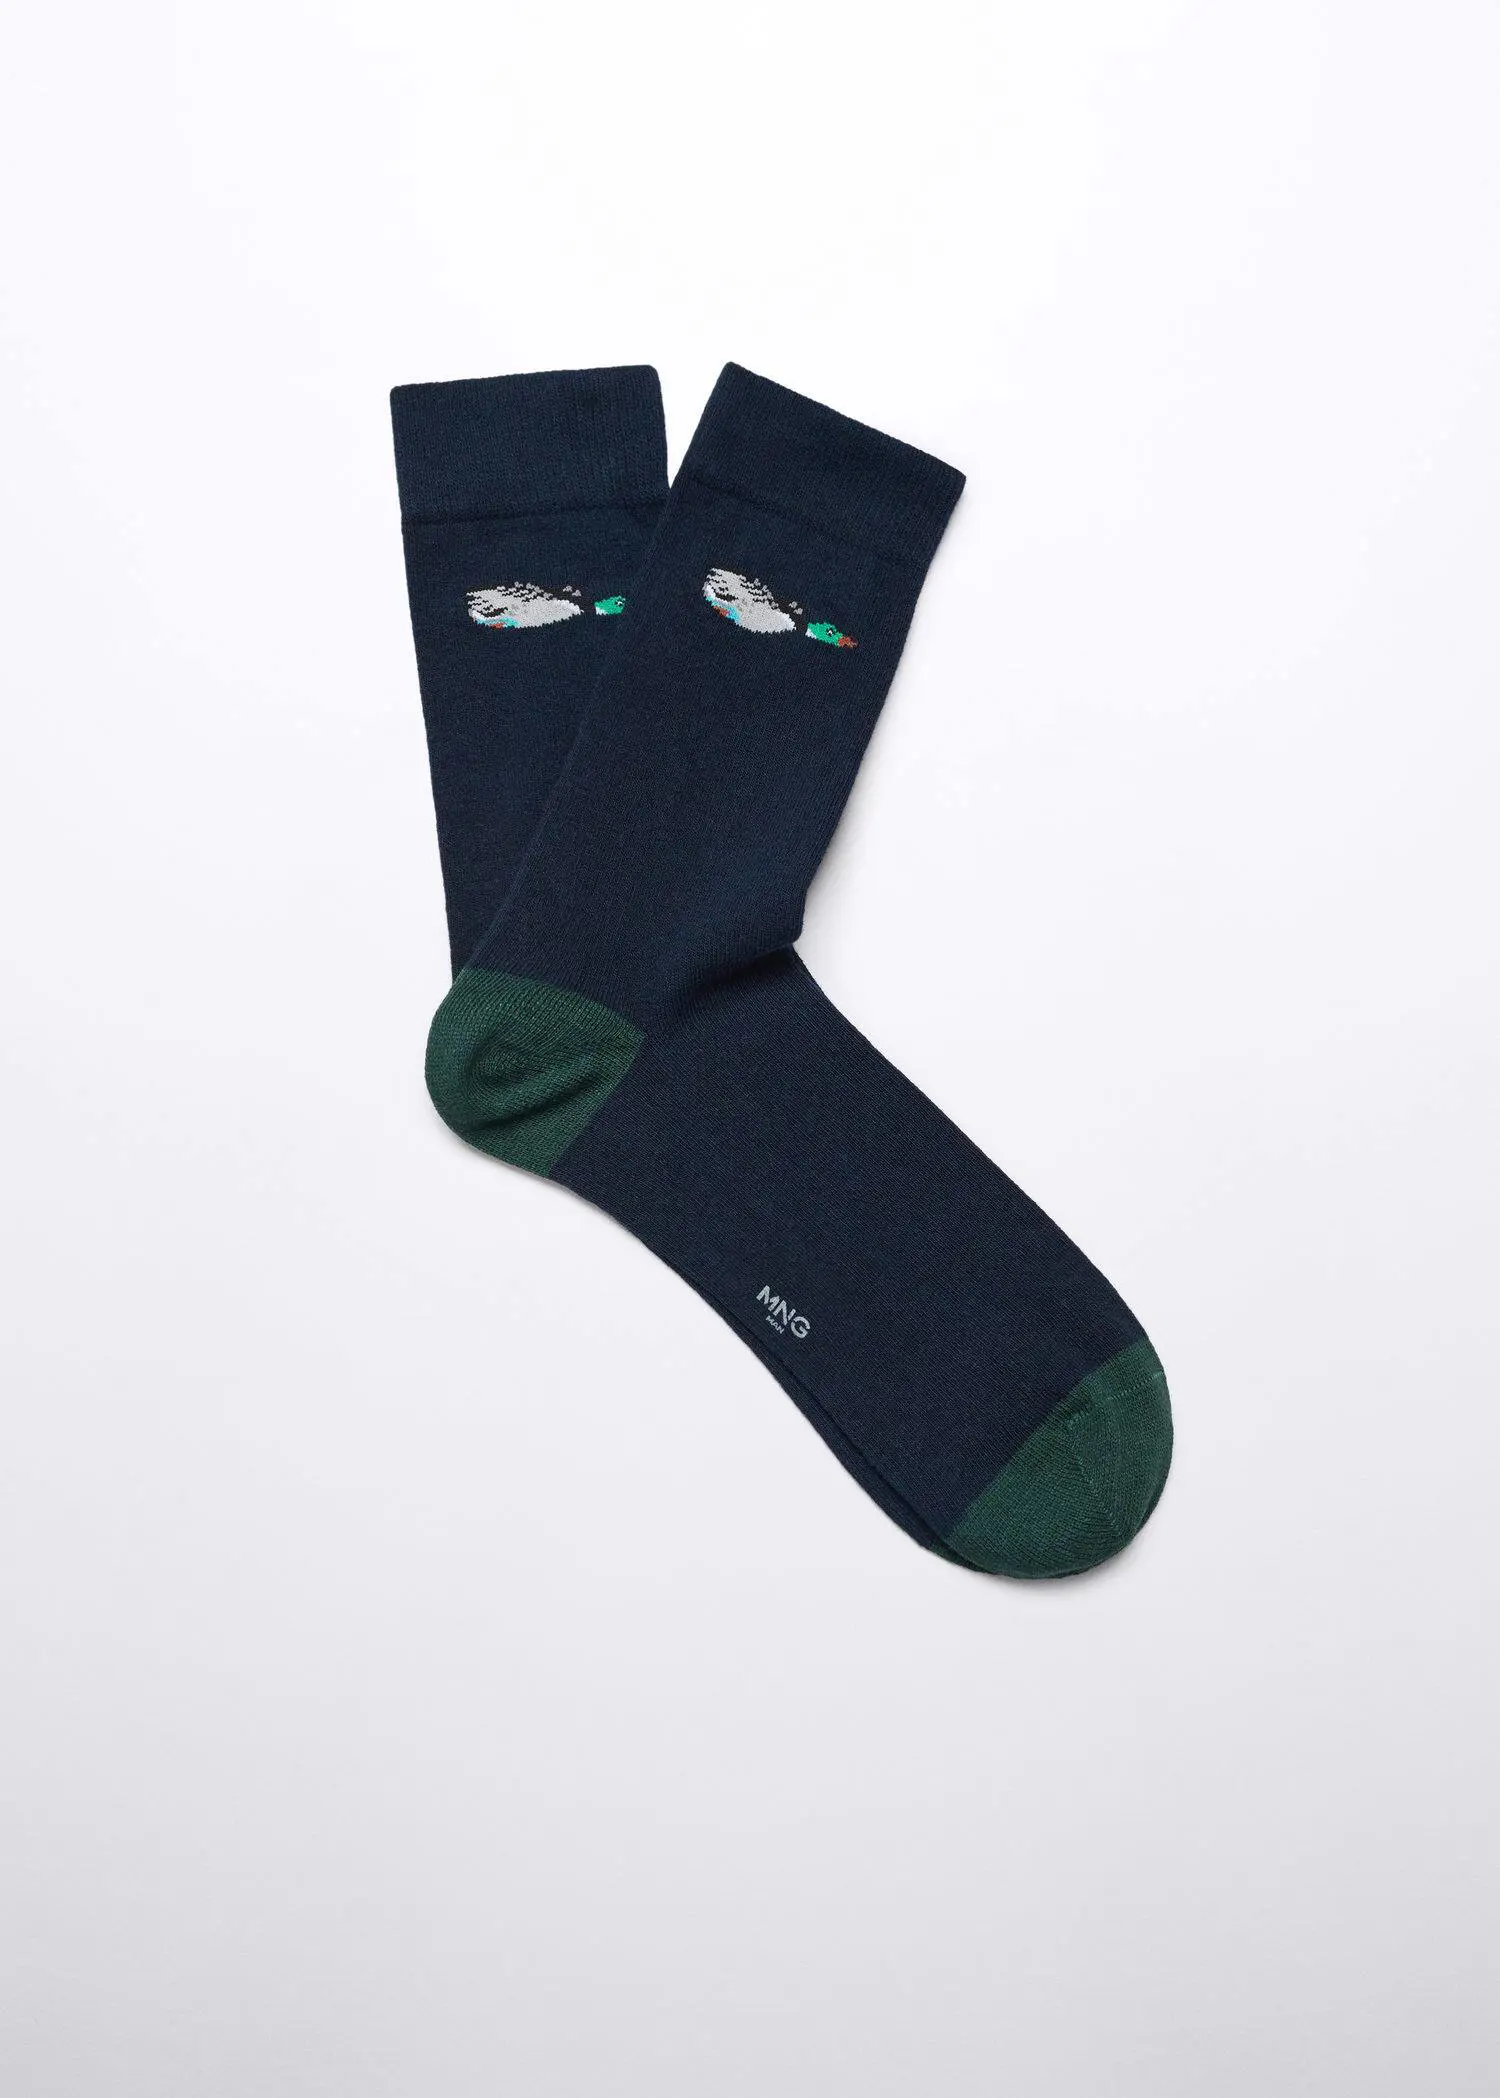 Mango Duck-design cotton socks. a pair of black socks with a green heel. 